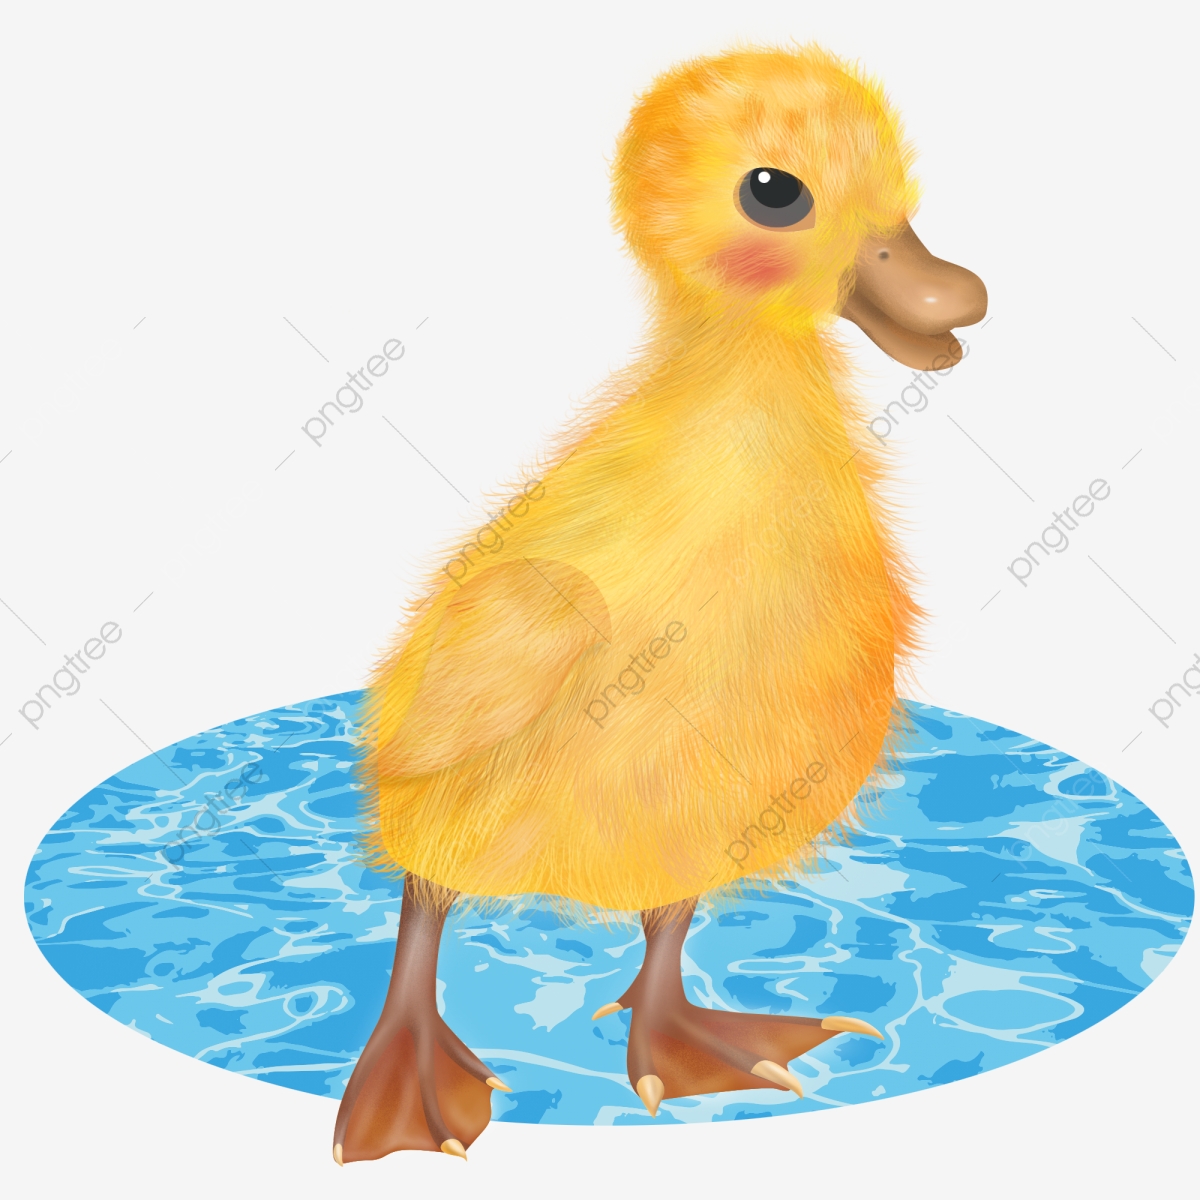 duckling clipart beautiful